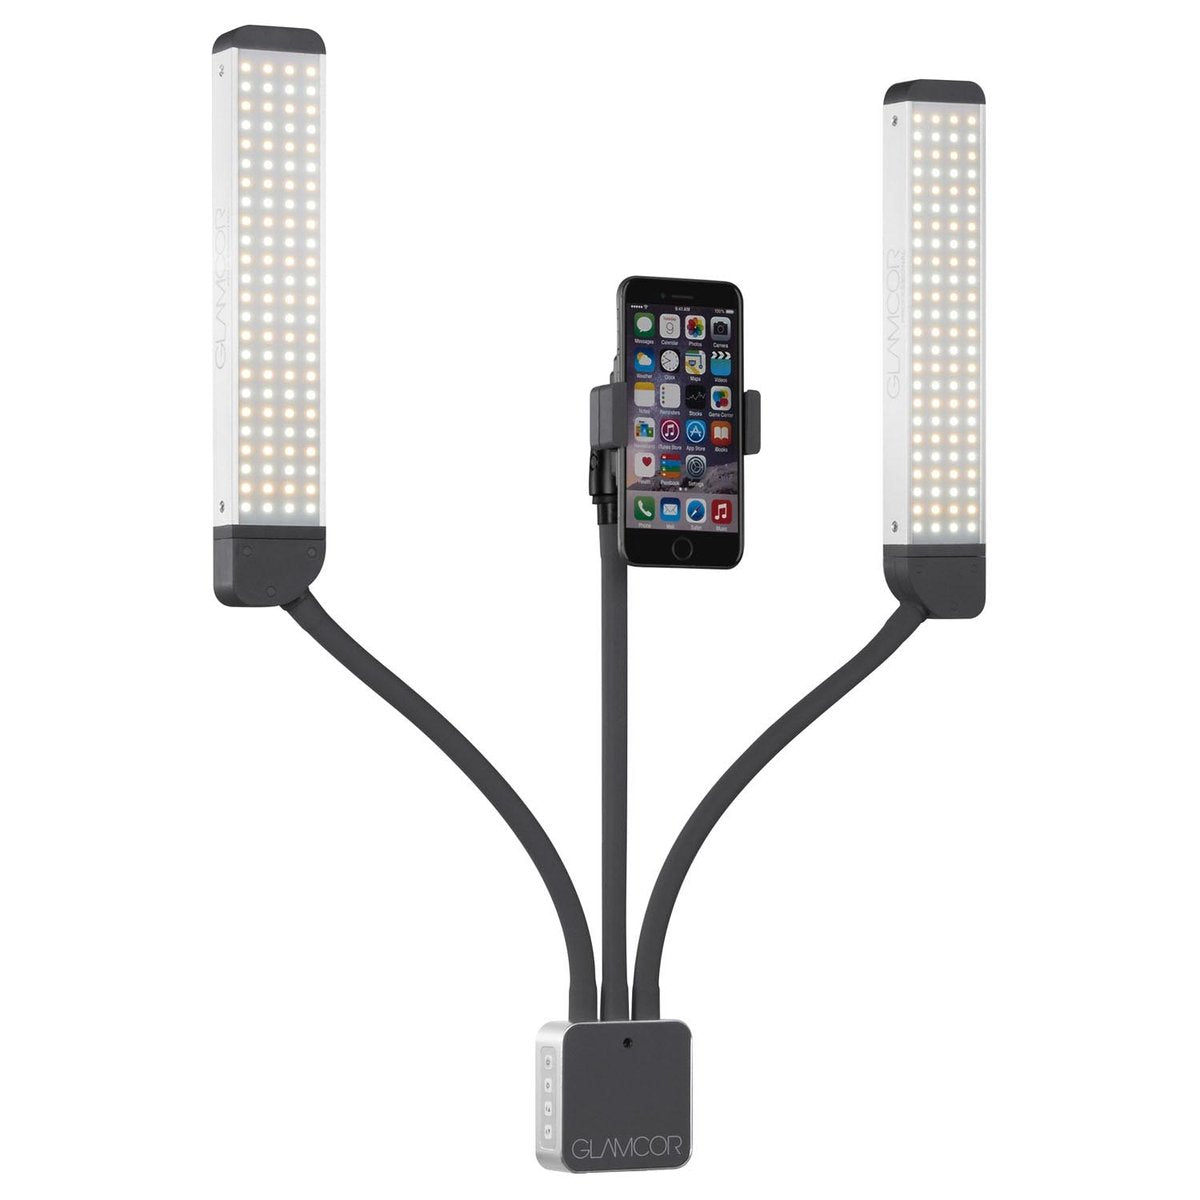 Lampada a LED Glamcor Multimedia Extreme con funzione selfie - Light Lashes